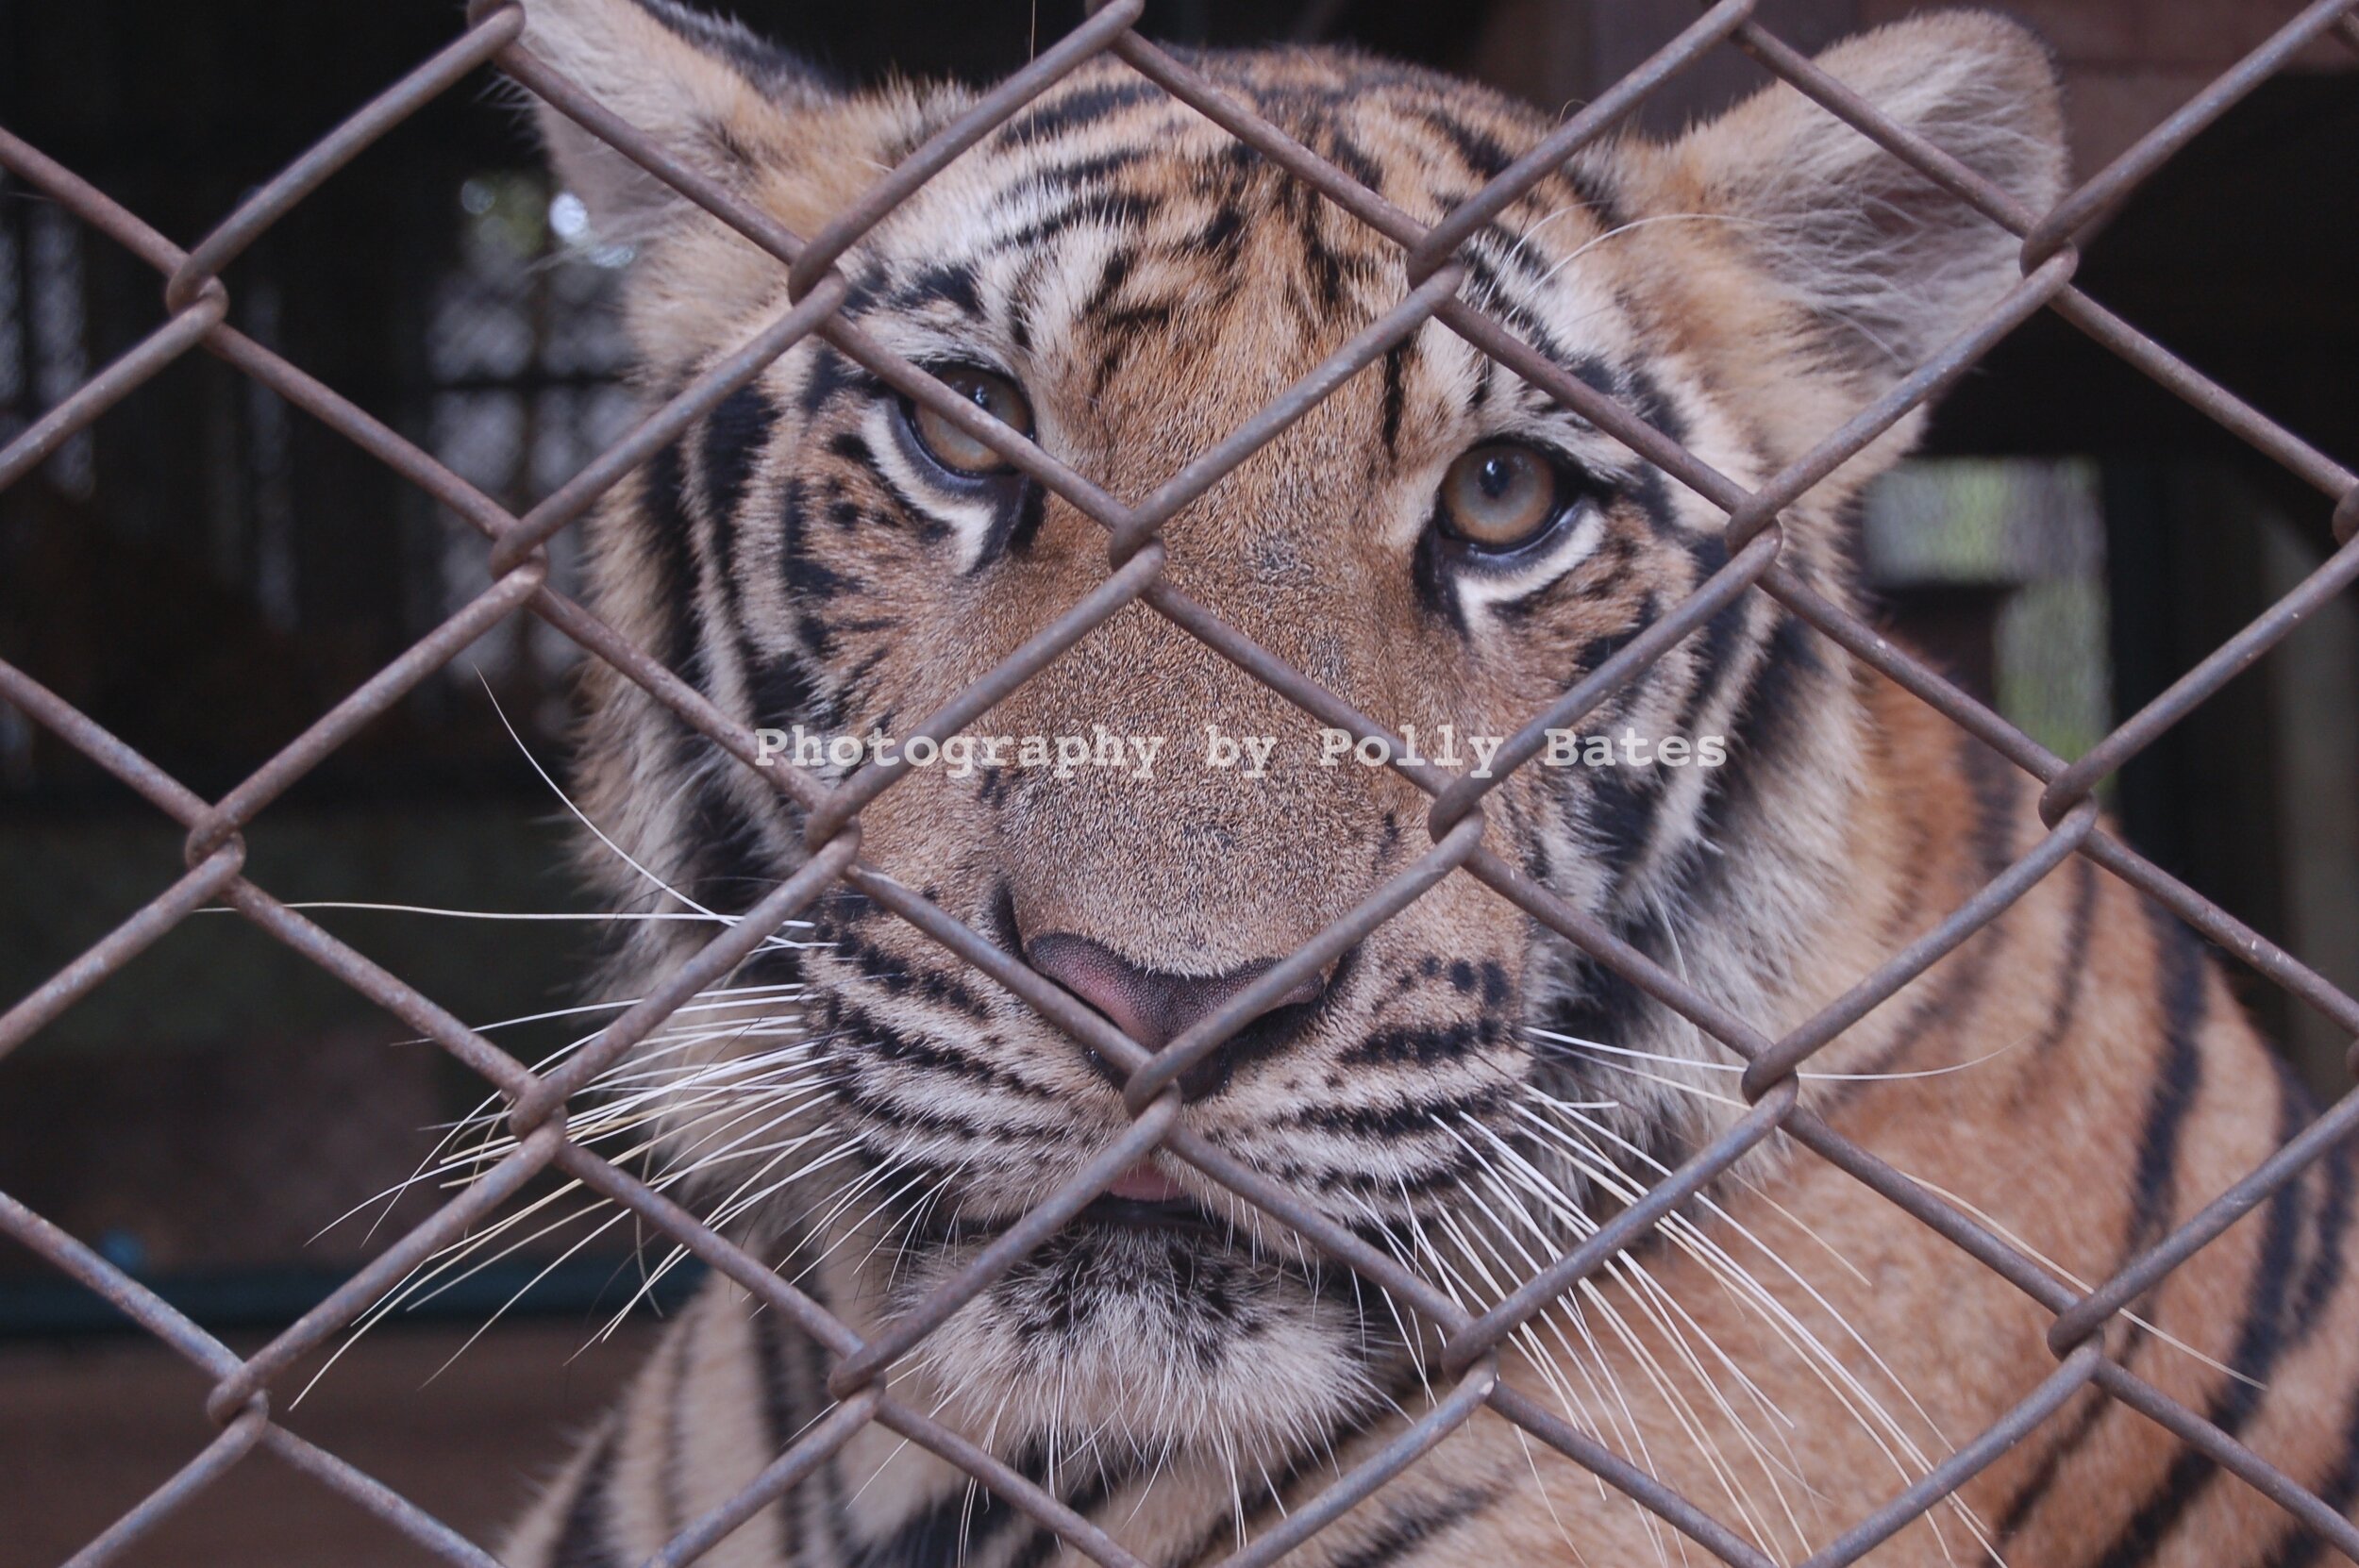 Polly Bates Caged Tiger Photography 2.jpg